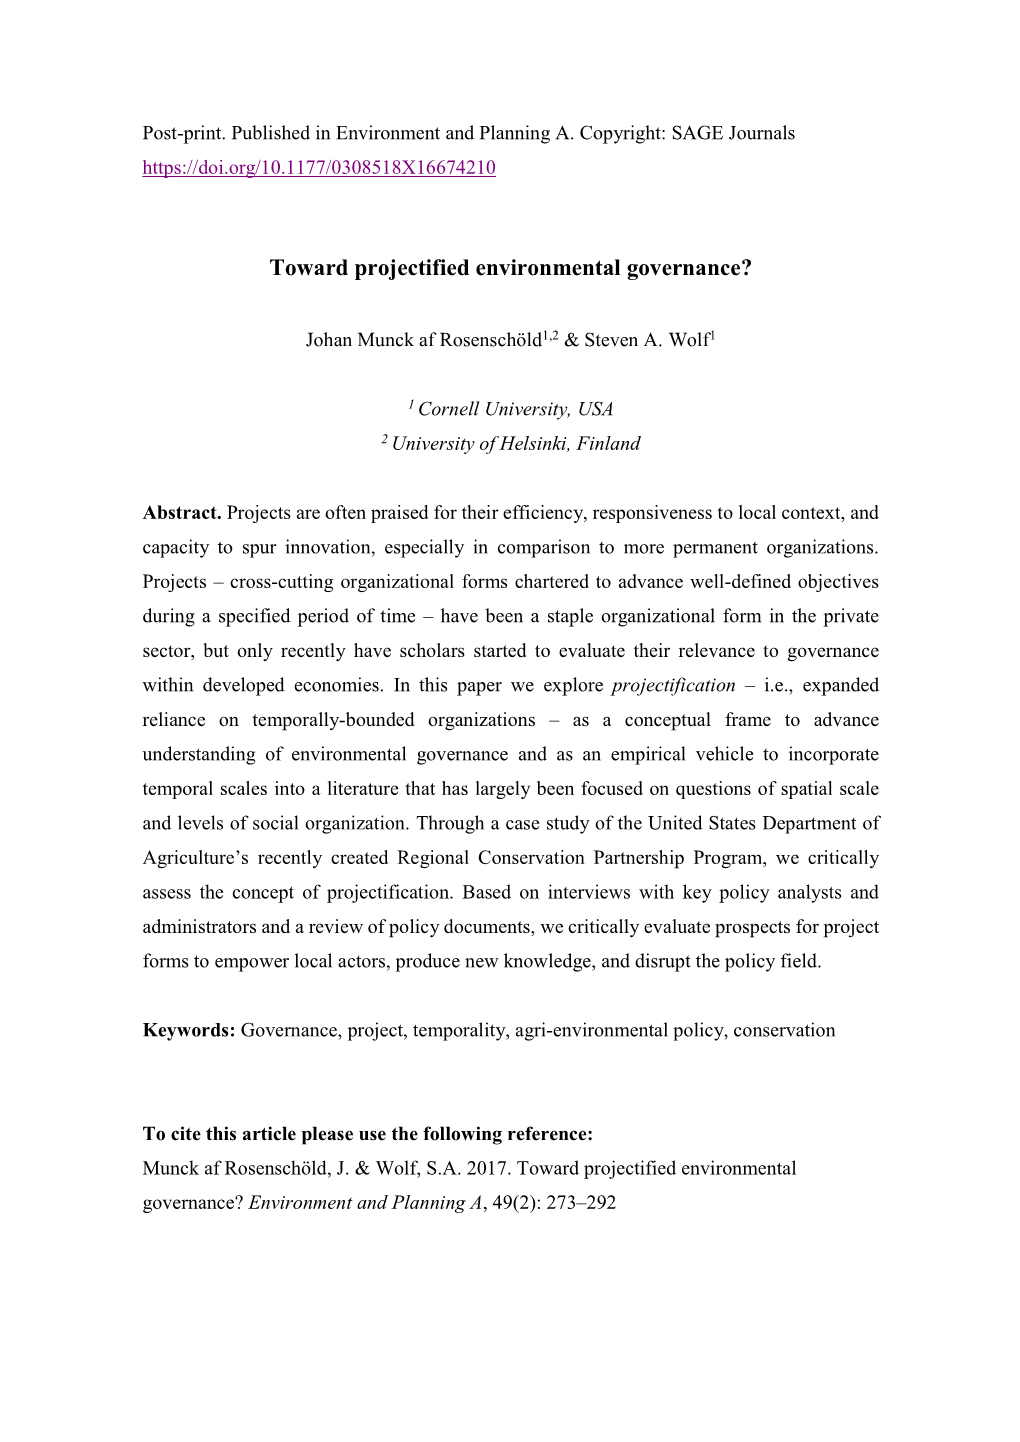 Toward Projectified Environmental Governance?